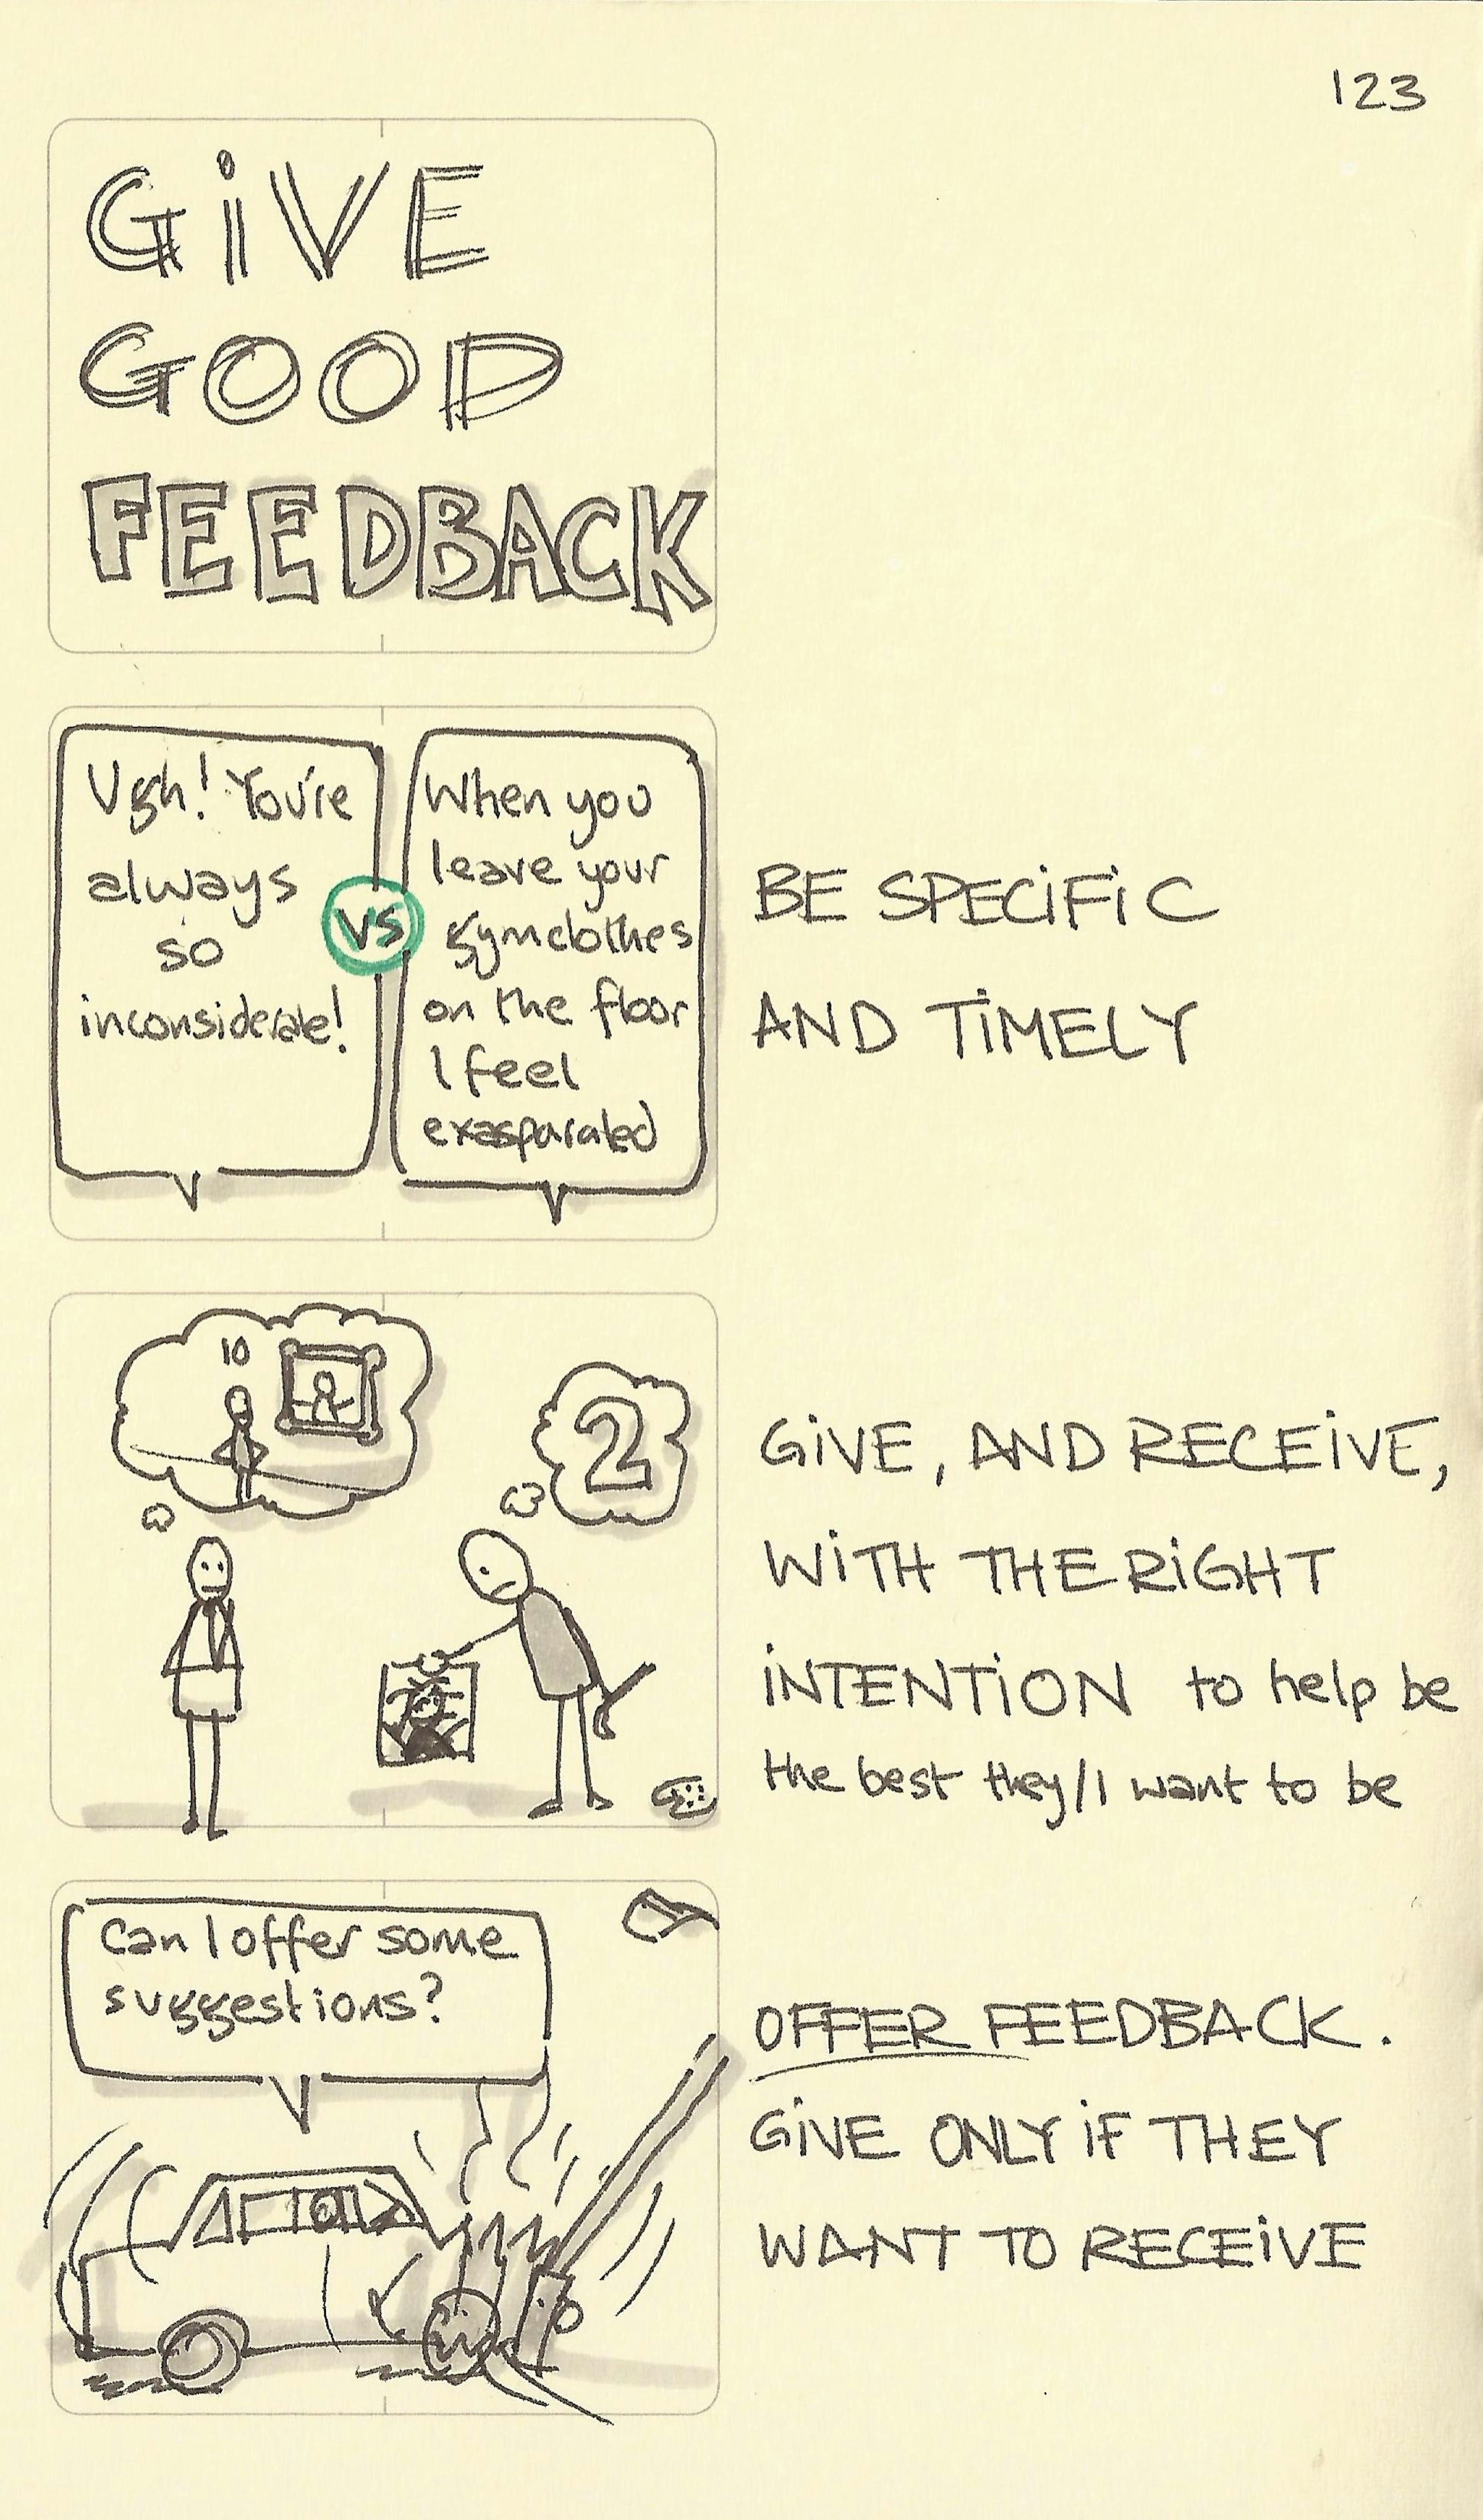 Give good feedback - Sketchplanations